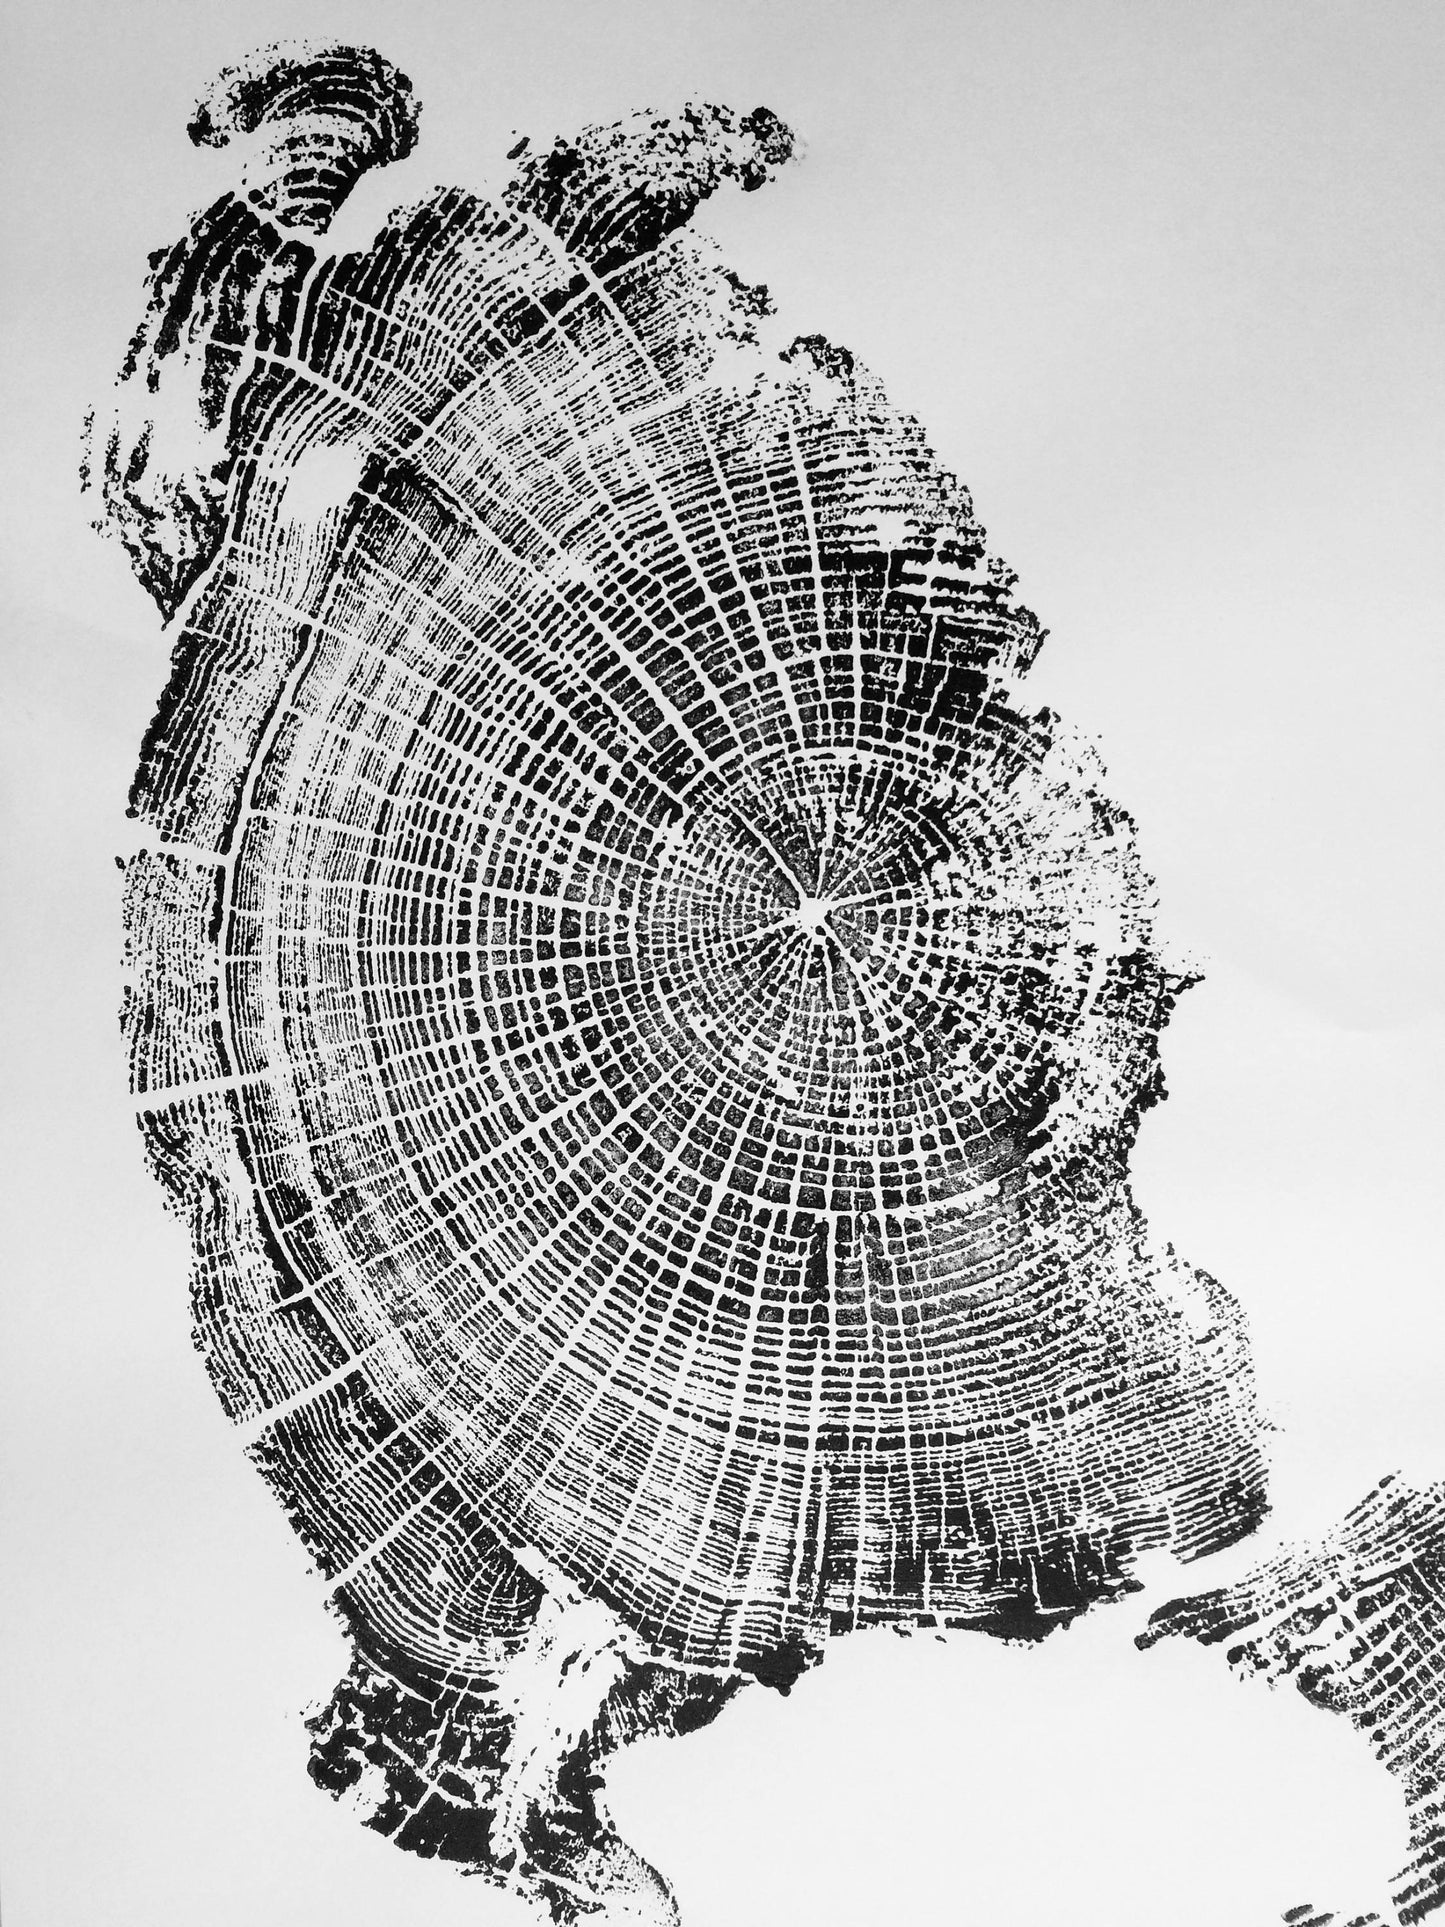 Cannon Beach, Oregon Driftwood - 18x24 print